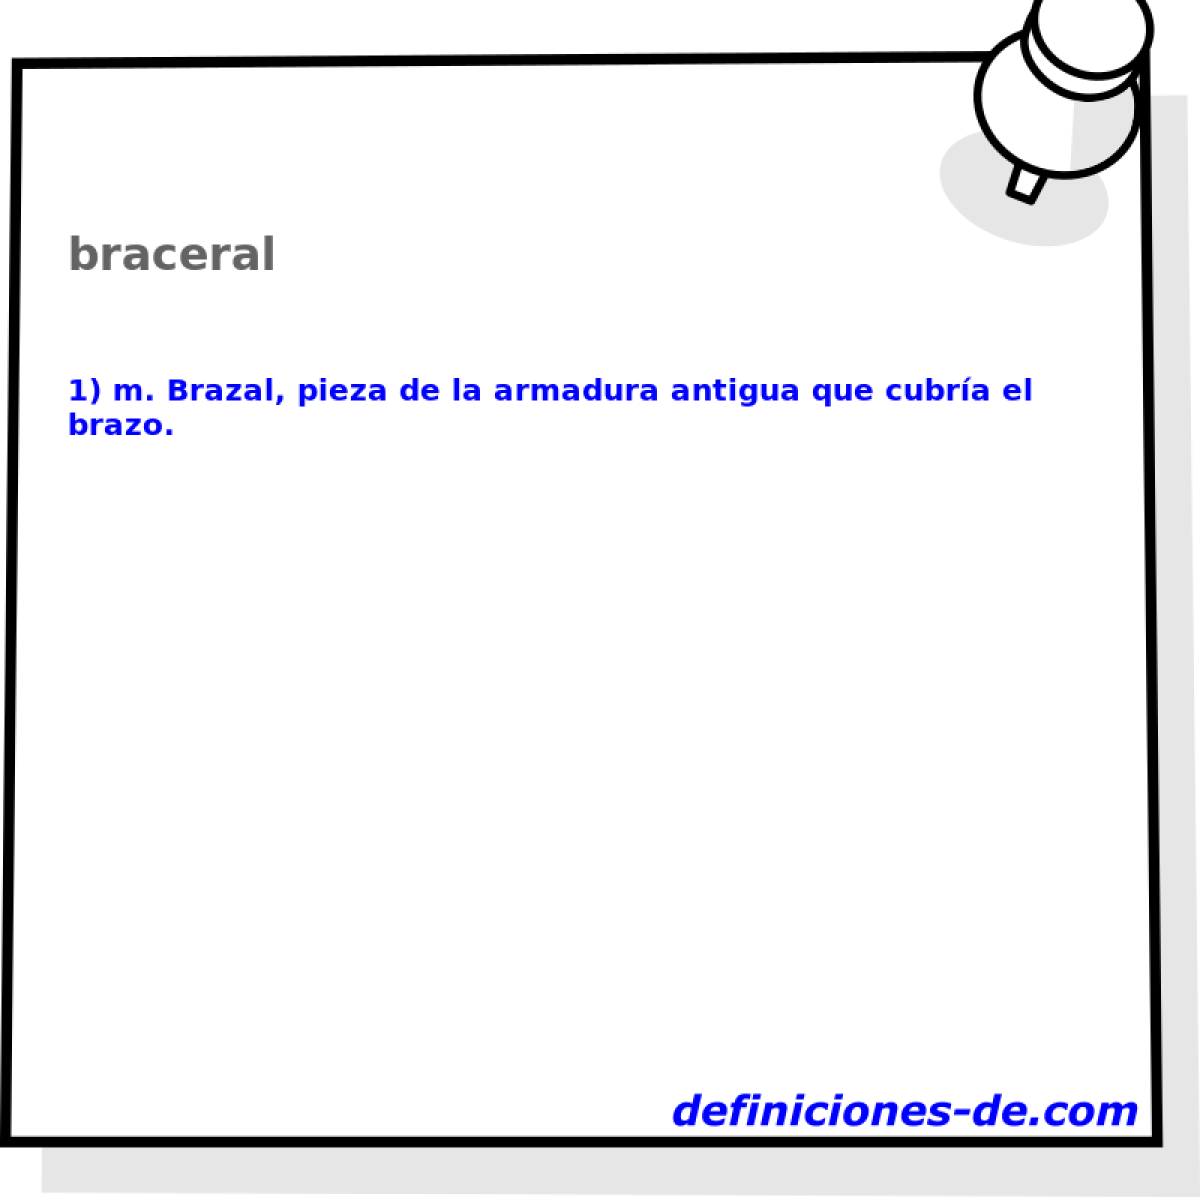 braceral 